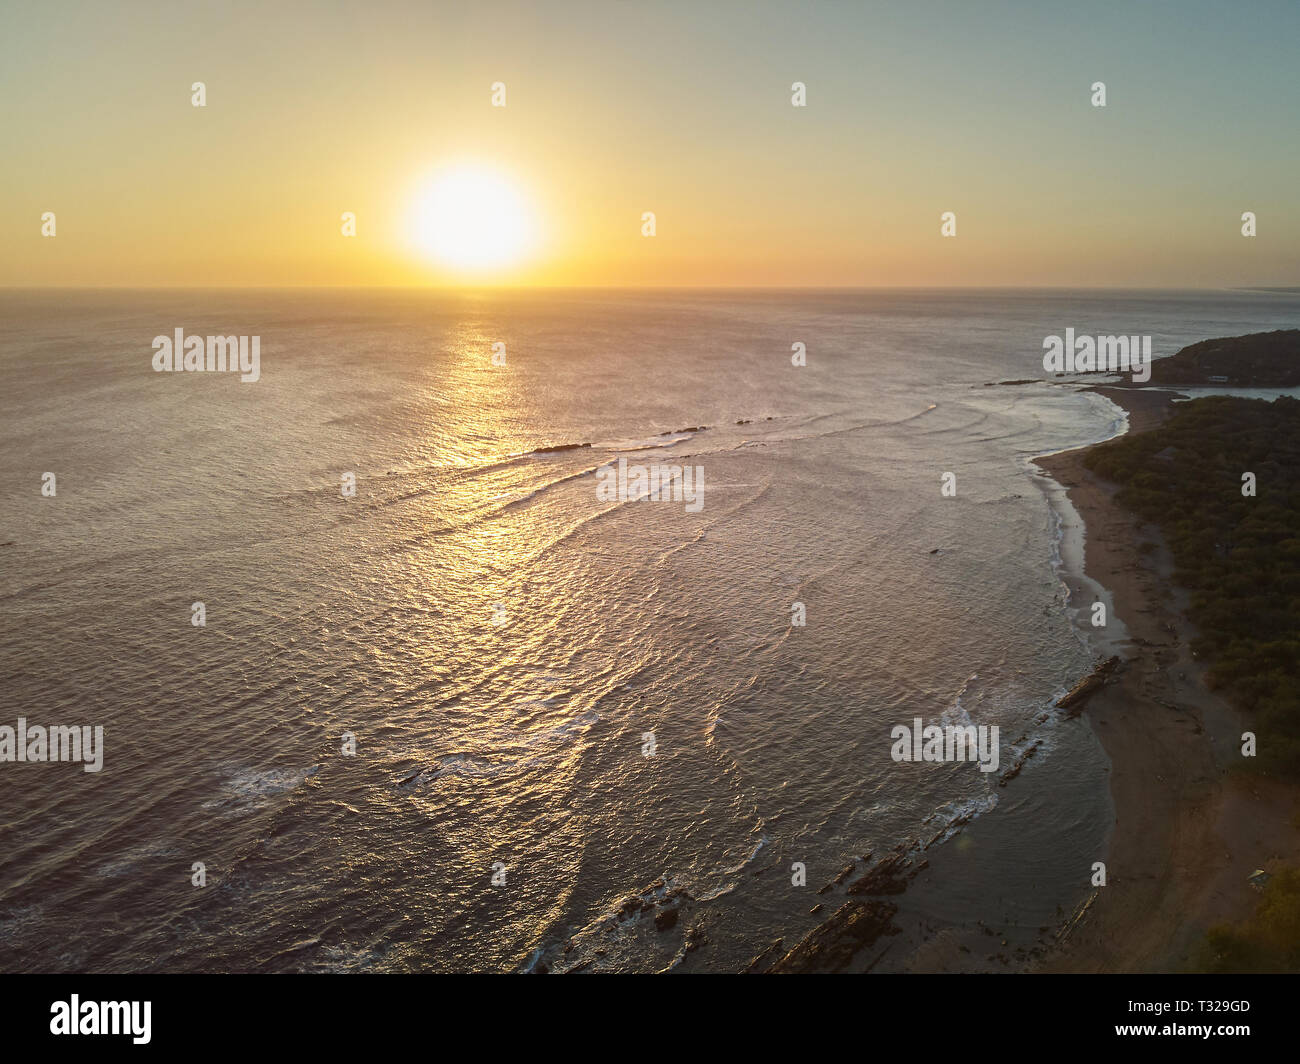 Scenic sunset background aerial view. Dusk coastline landscape Stock Photo